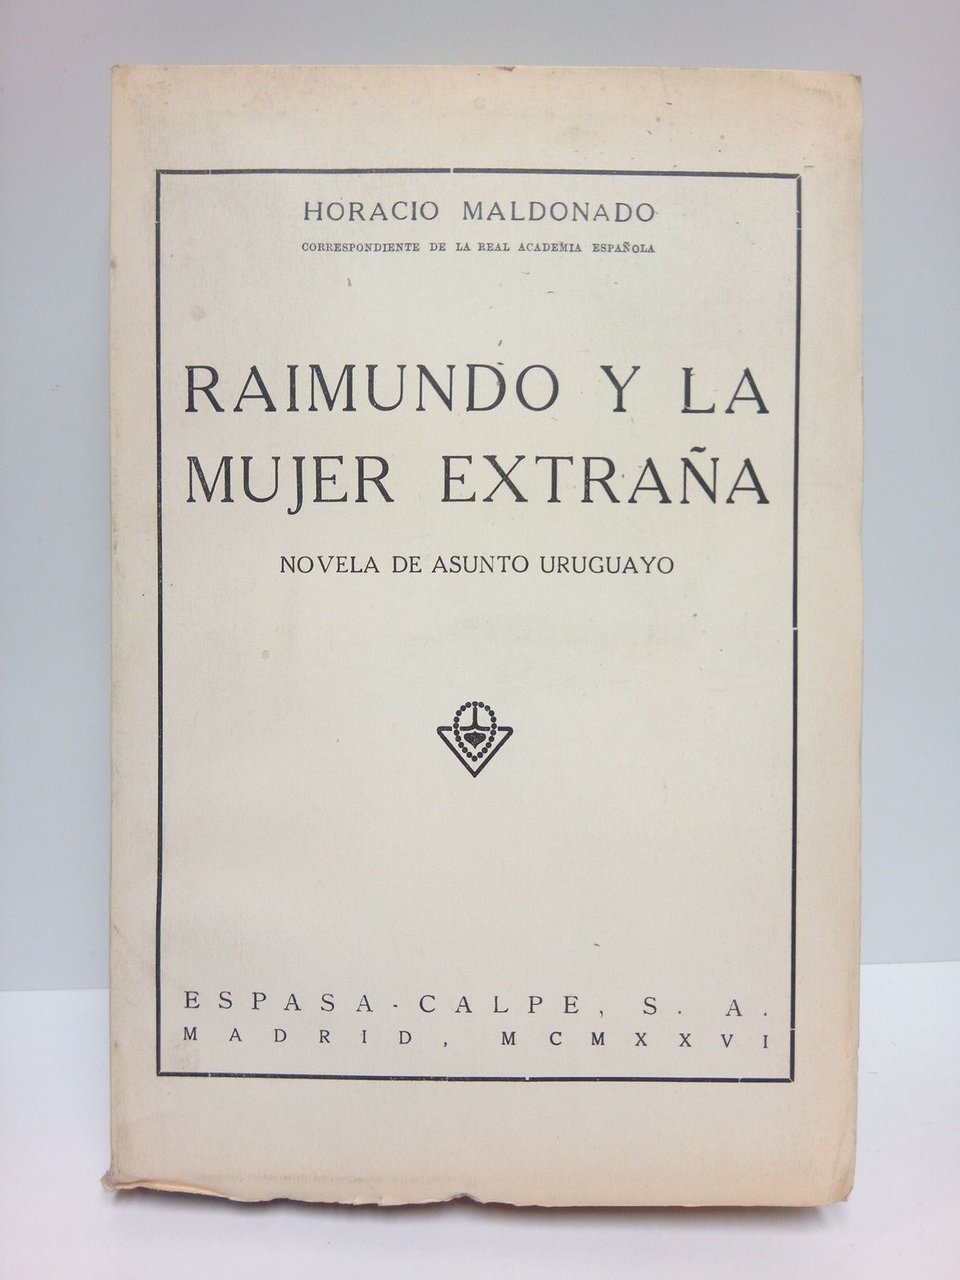 Raimundo y la mujer extraña: Novela de asunto uruguayo